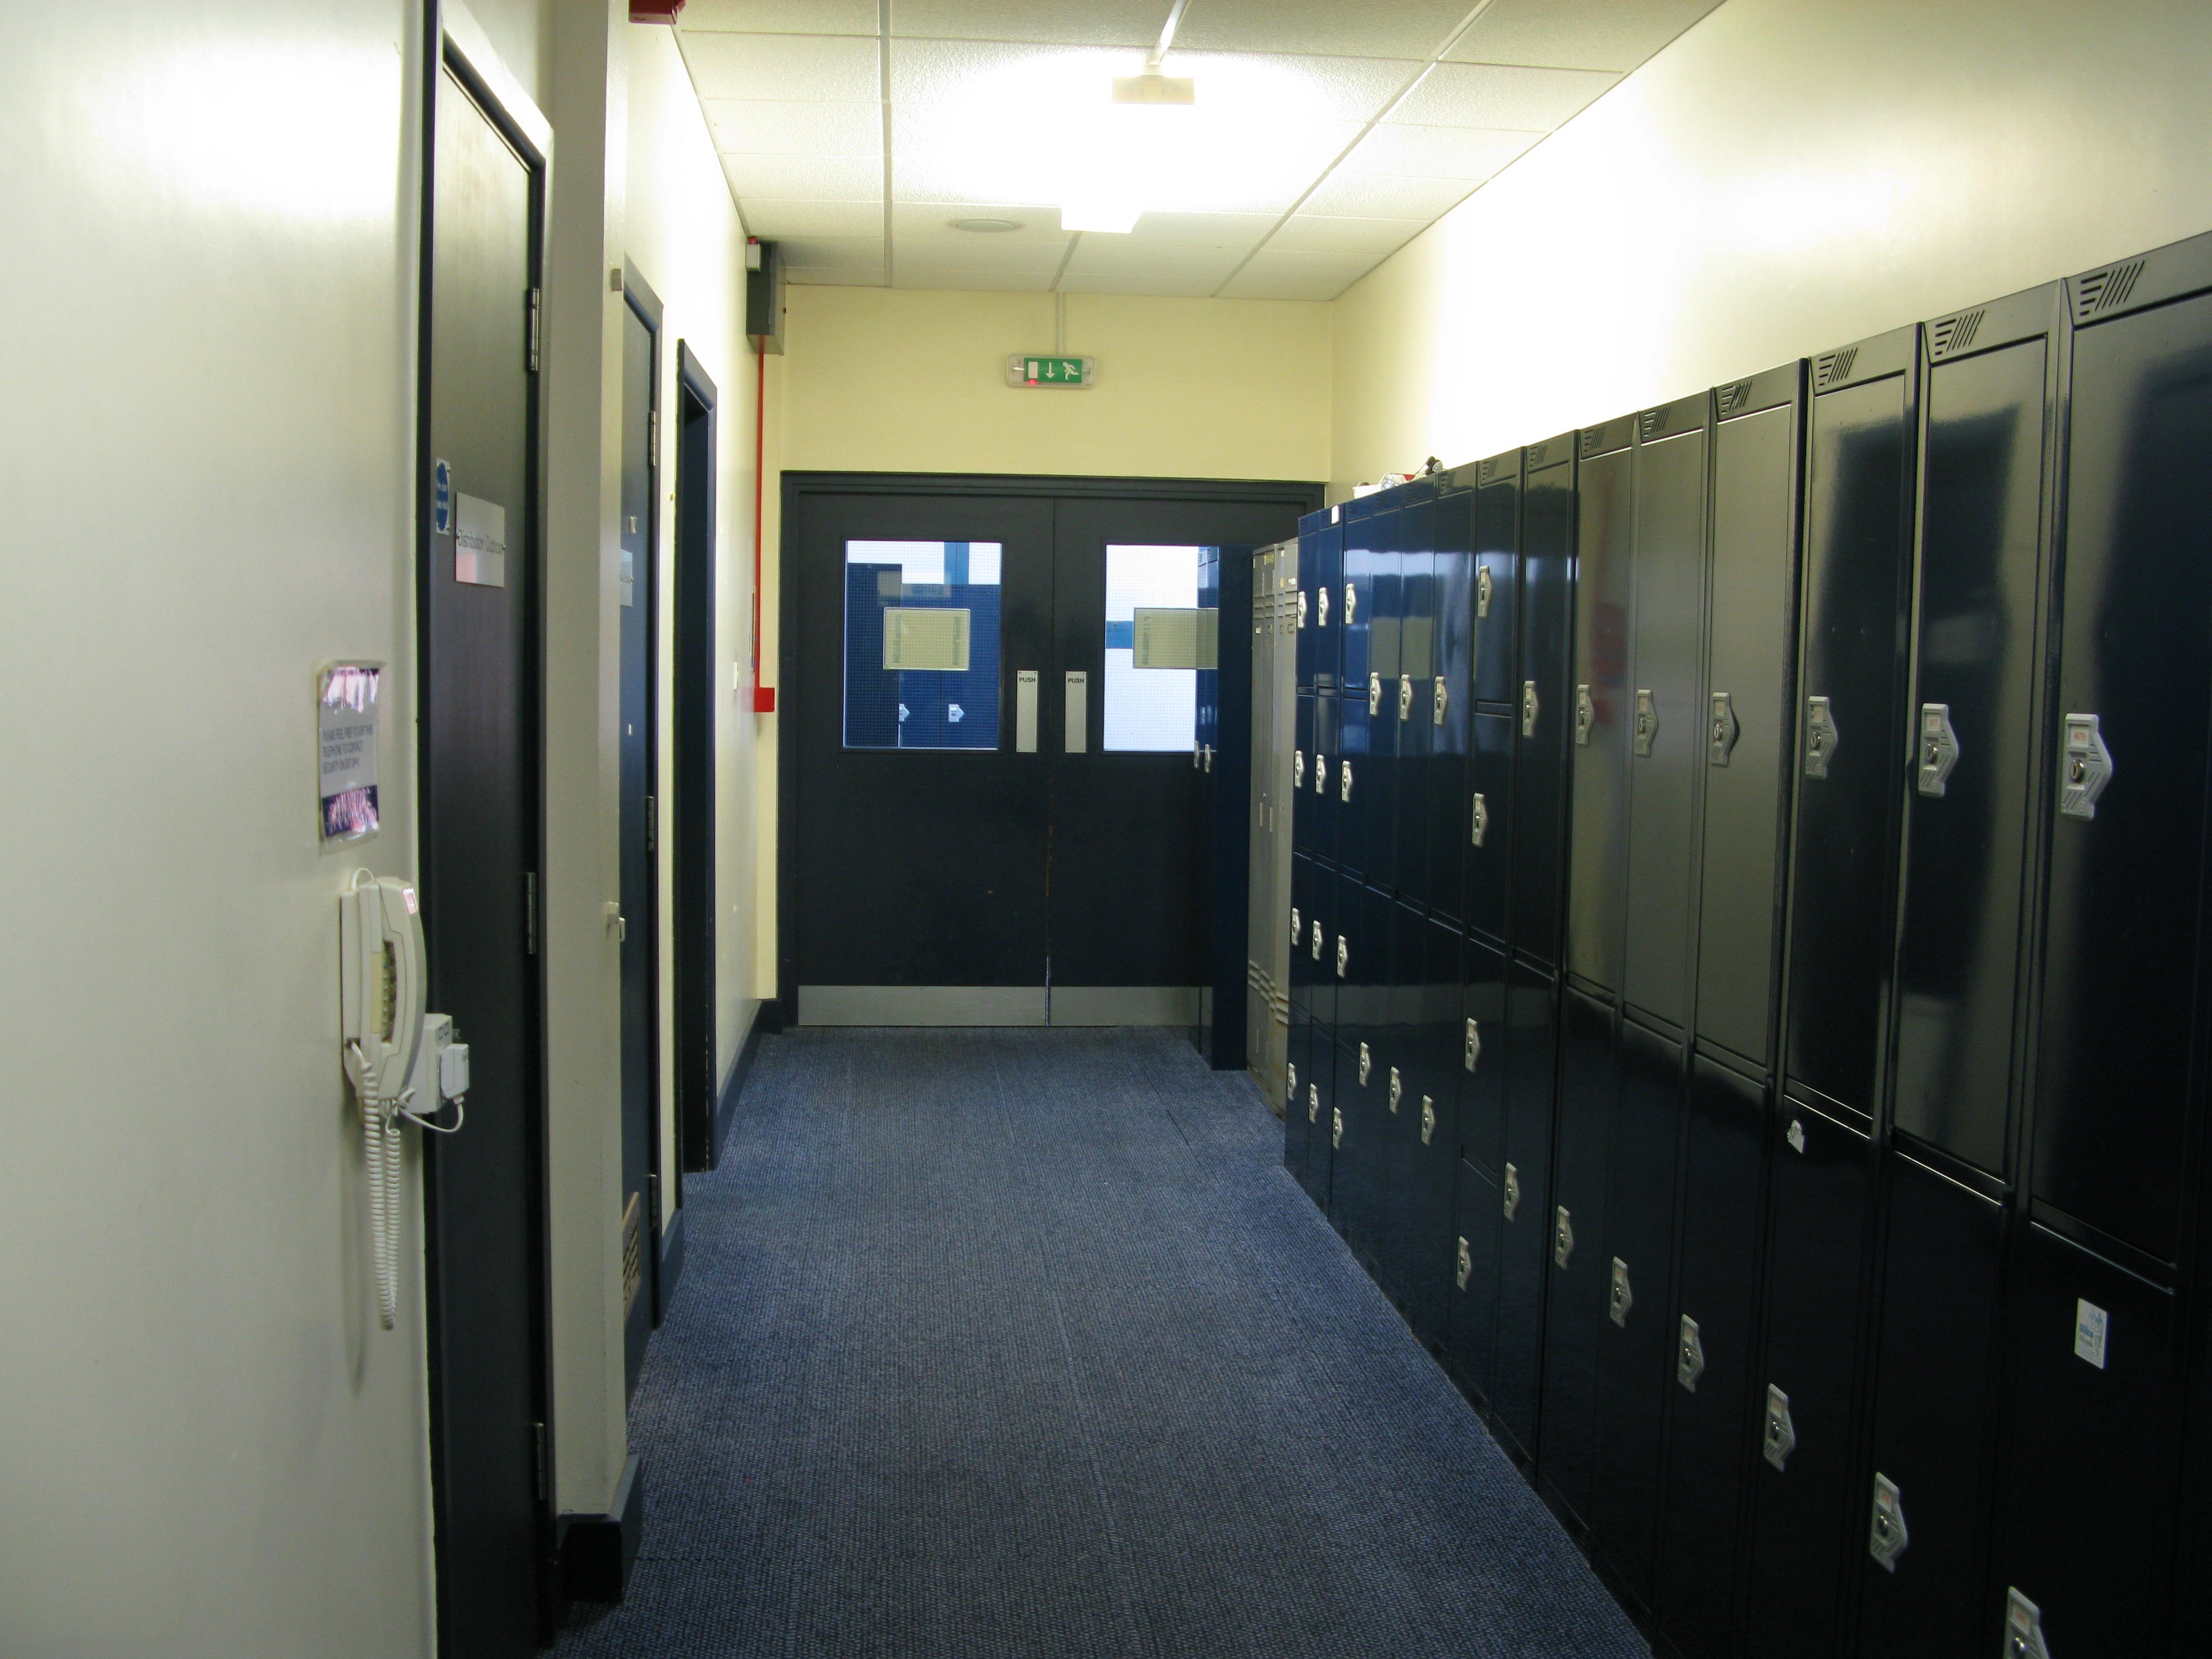 Services Block lockers